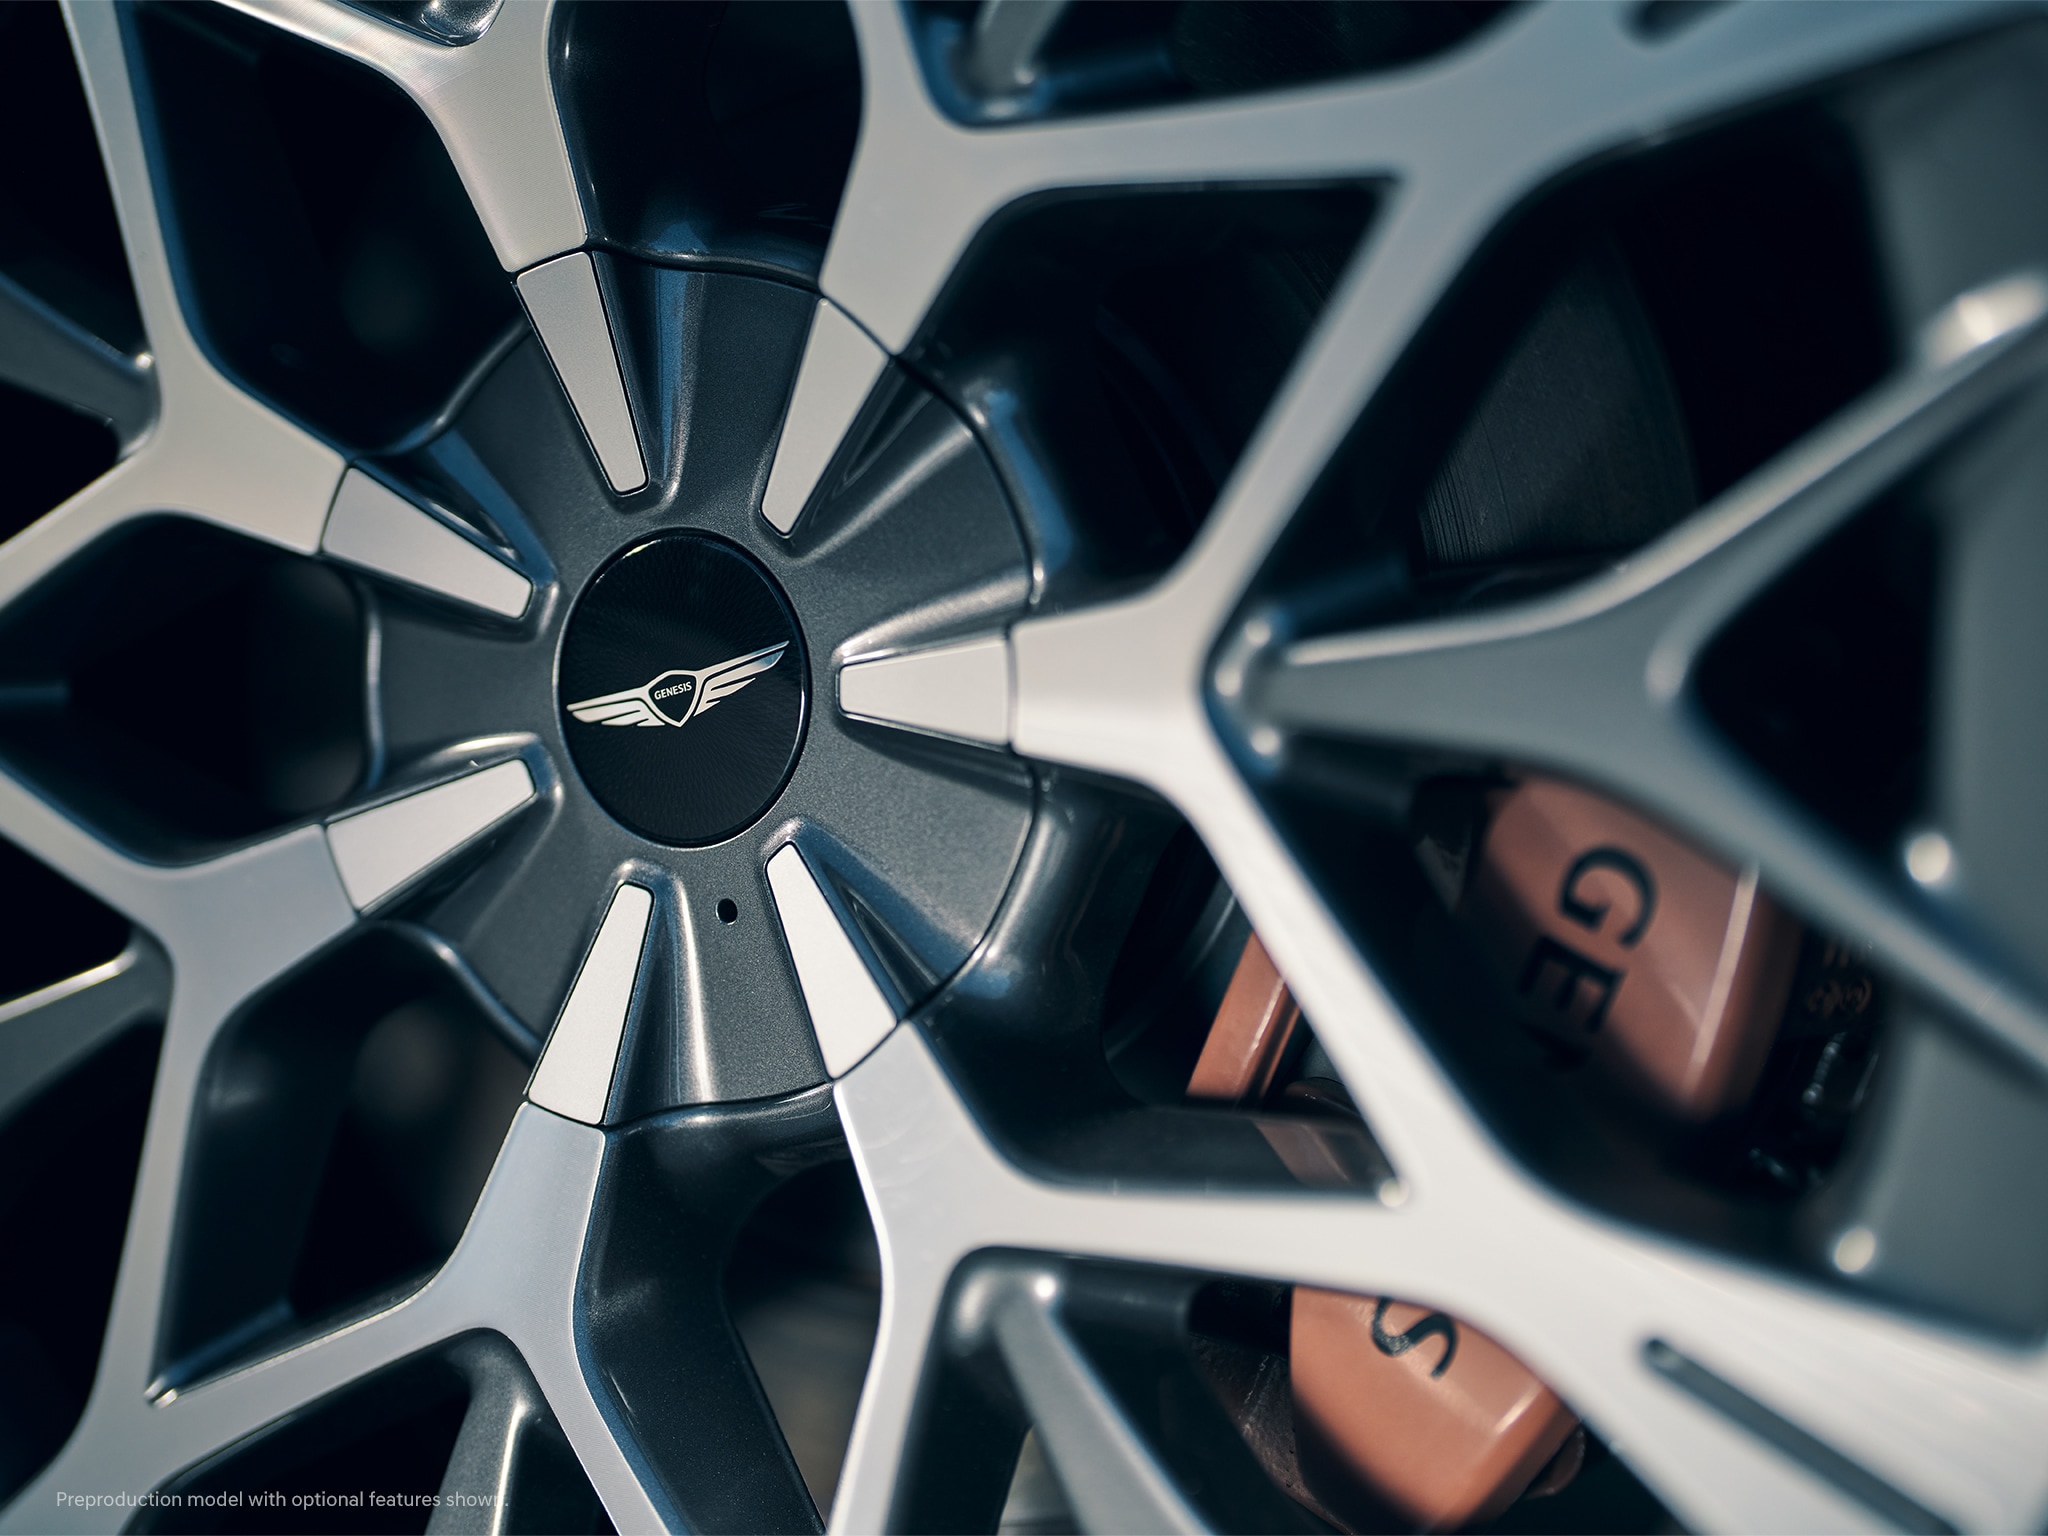 2023 Genesis G90 21-inch alloy wheel detail.